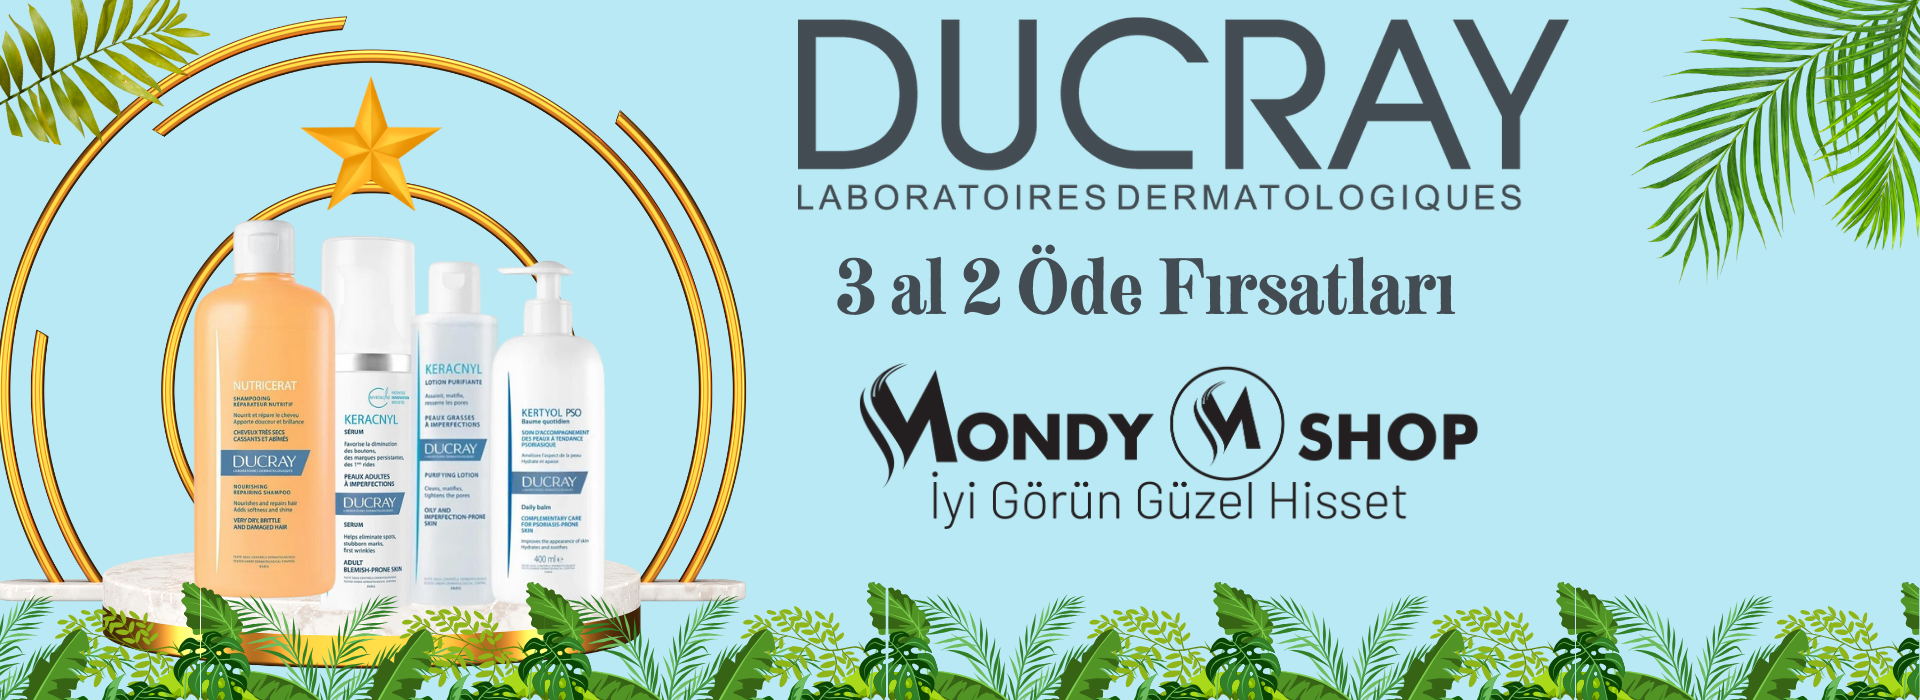 Ducray Mondy Shop